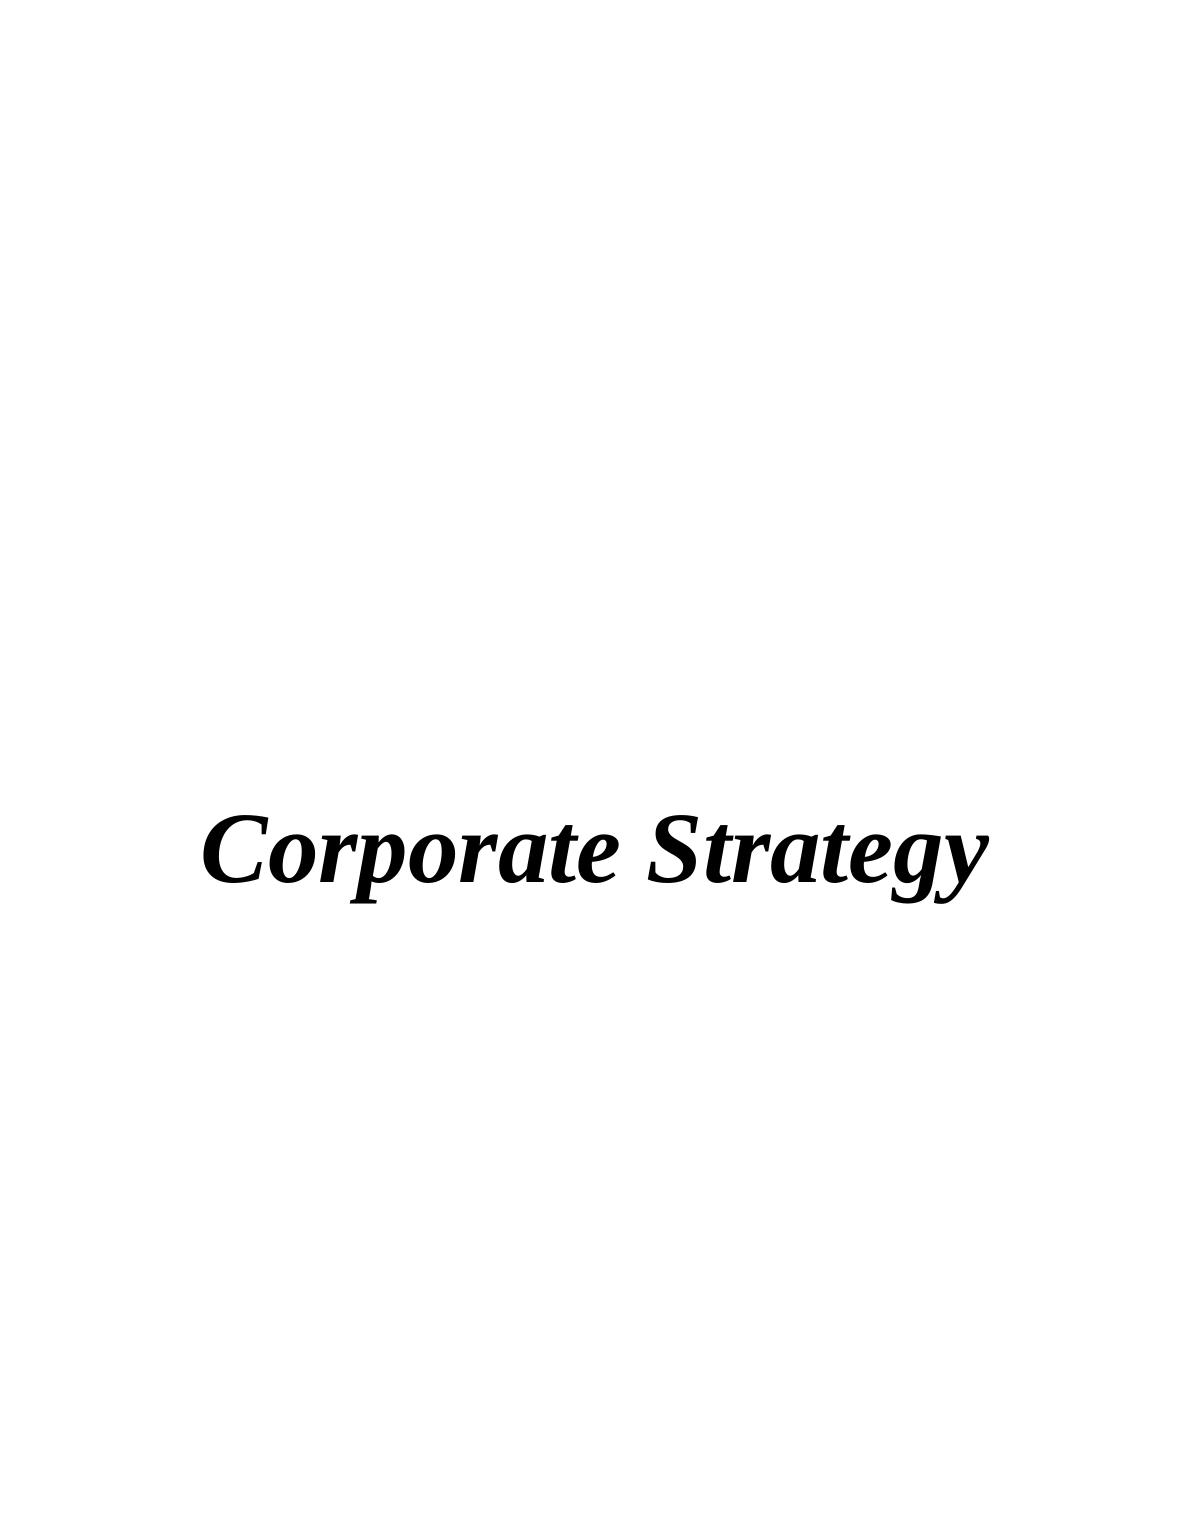 Corporate Strategy of ZARA_1